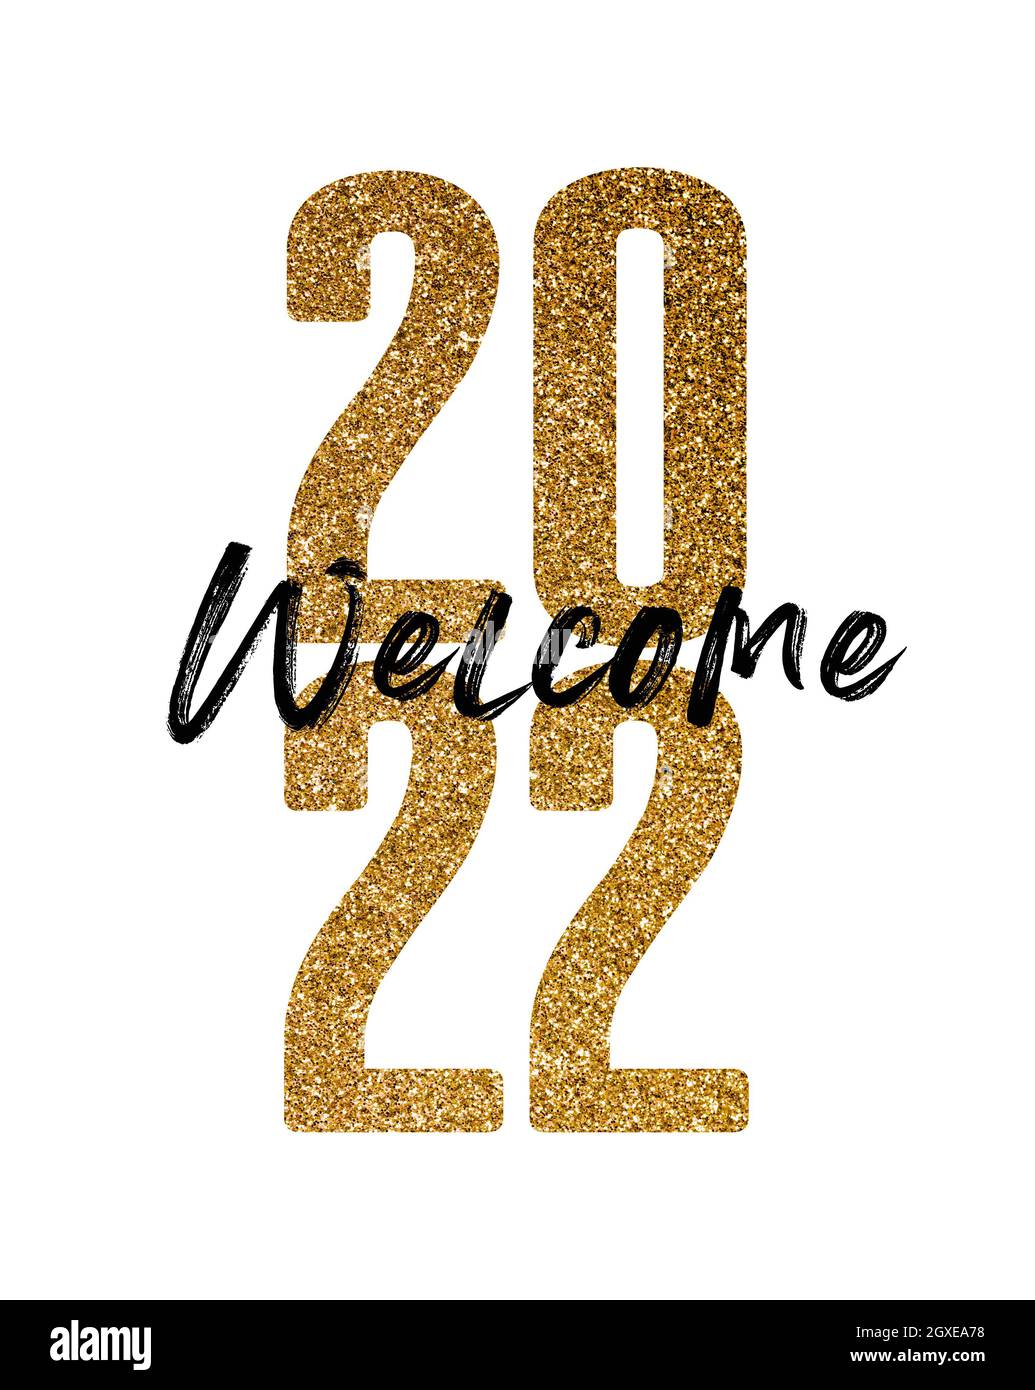 Happy new year 2022 gold glitter celebration text background Stock Photo